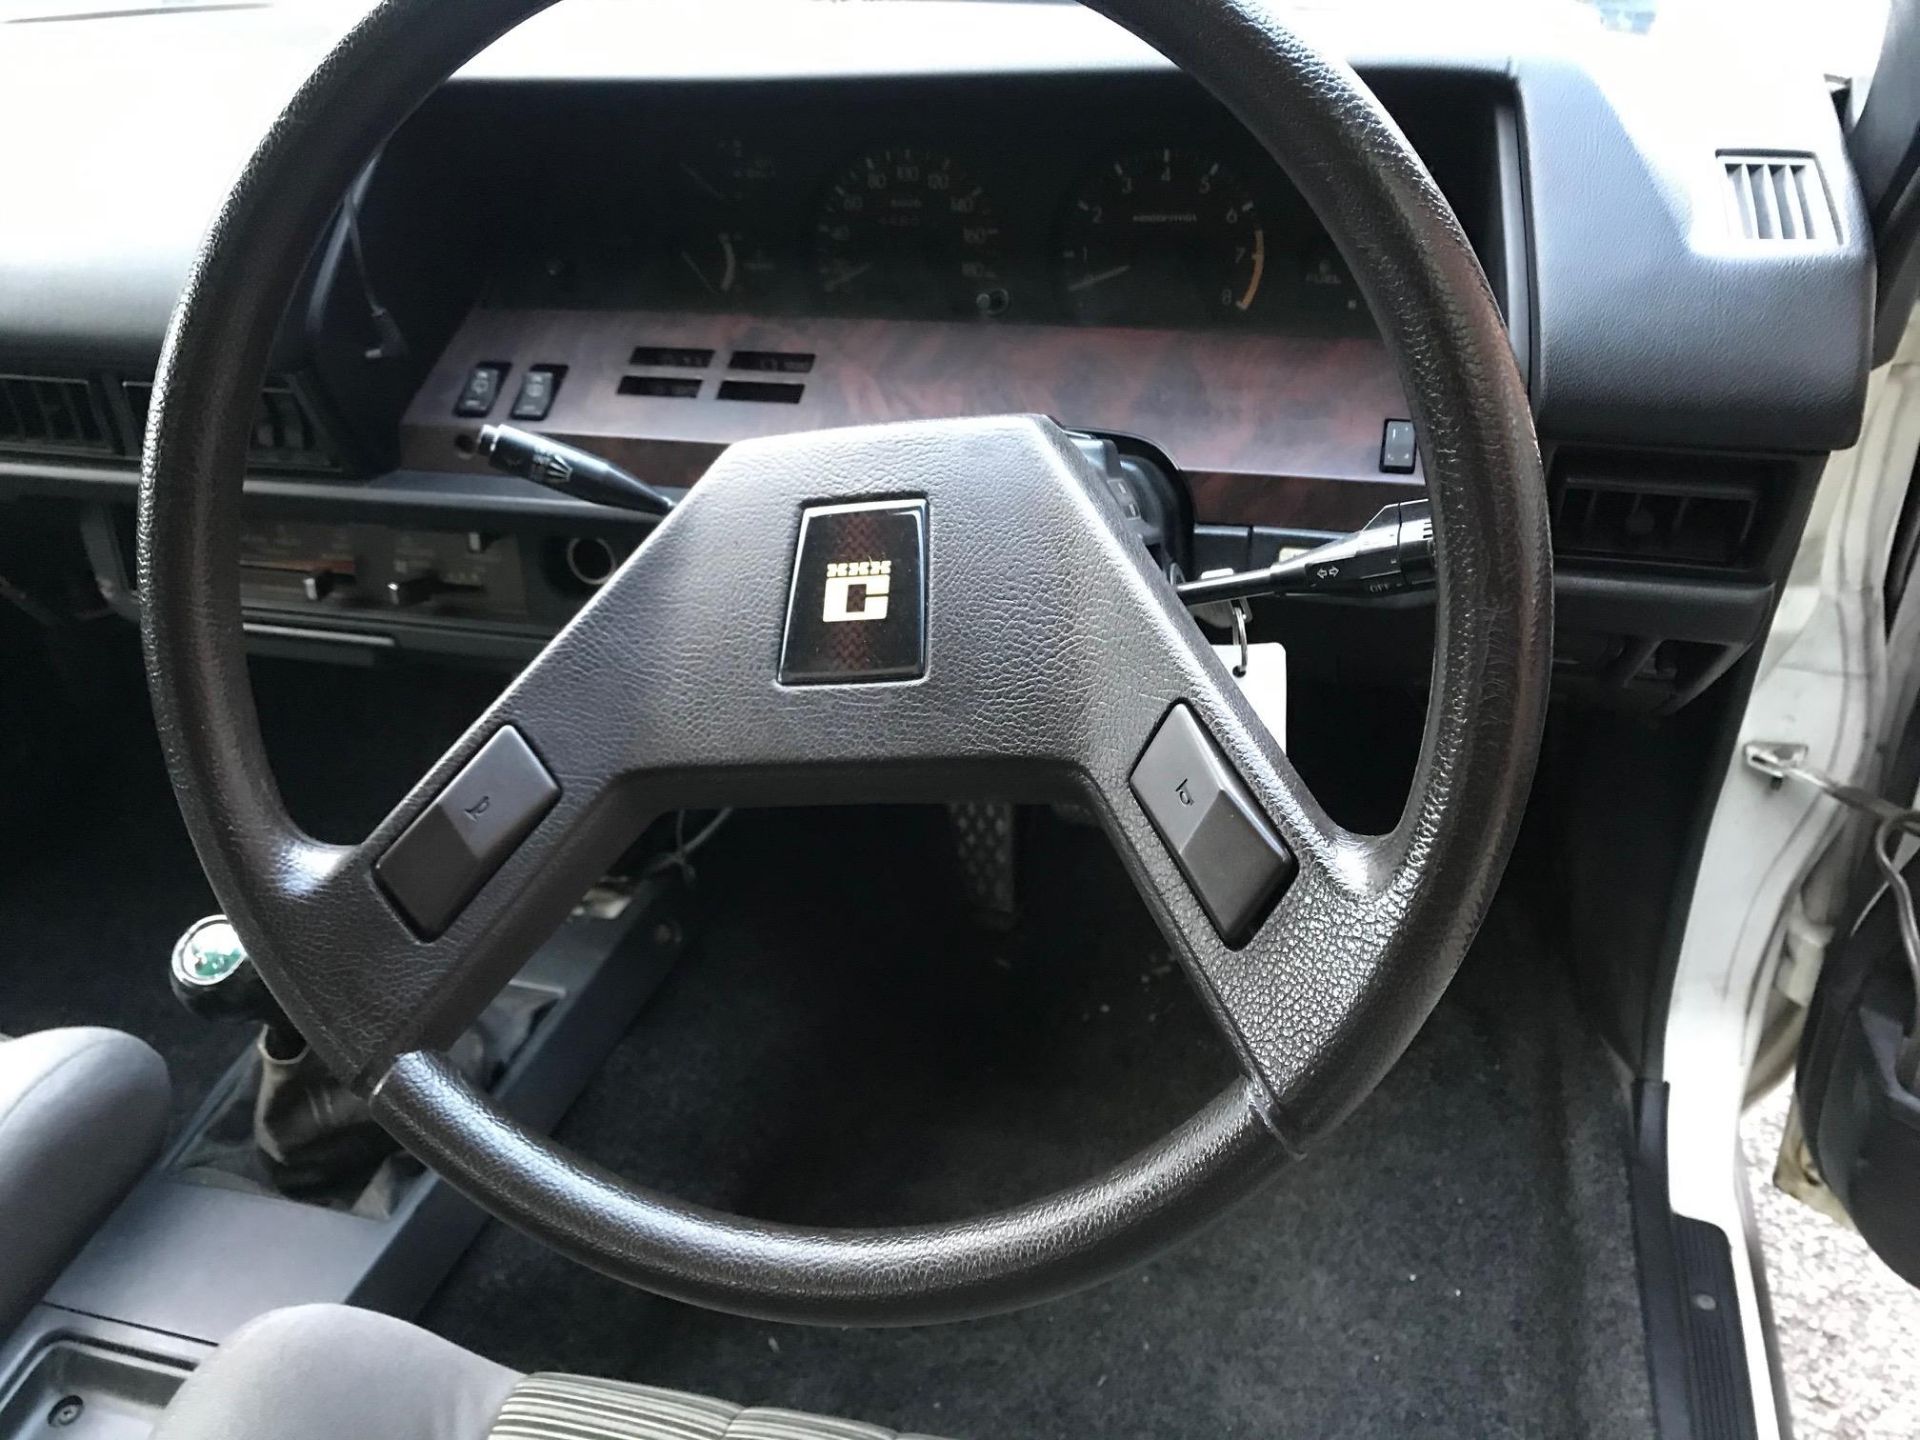 1981 Toyota Corolla GT TE71-0444409 - Image 24 of 34